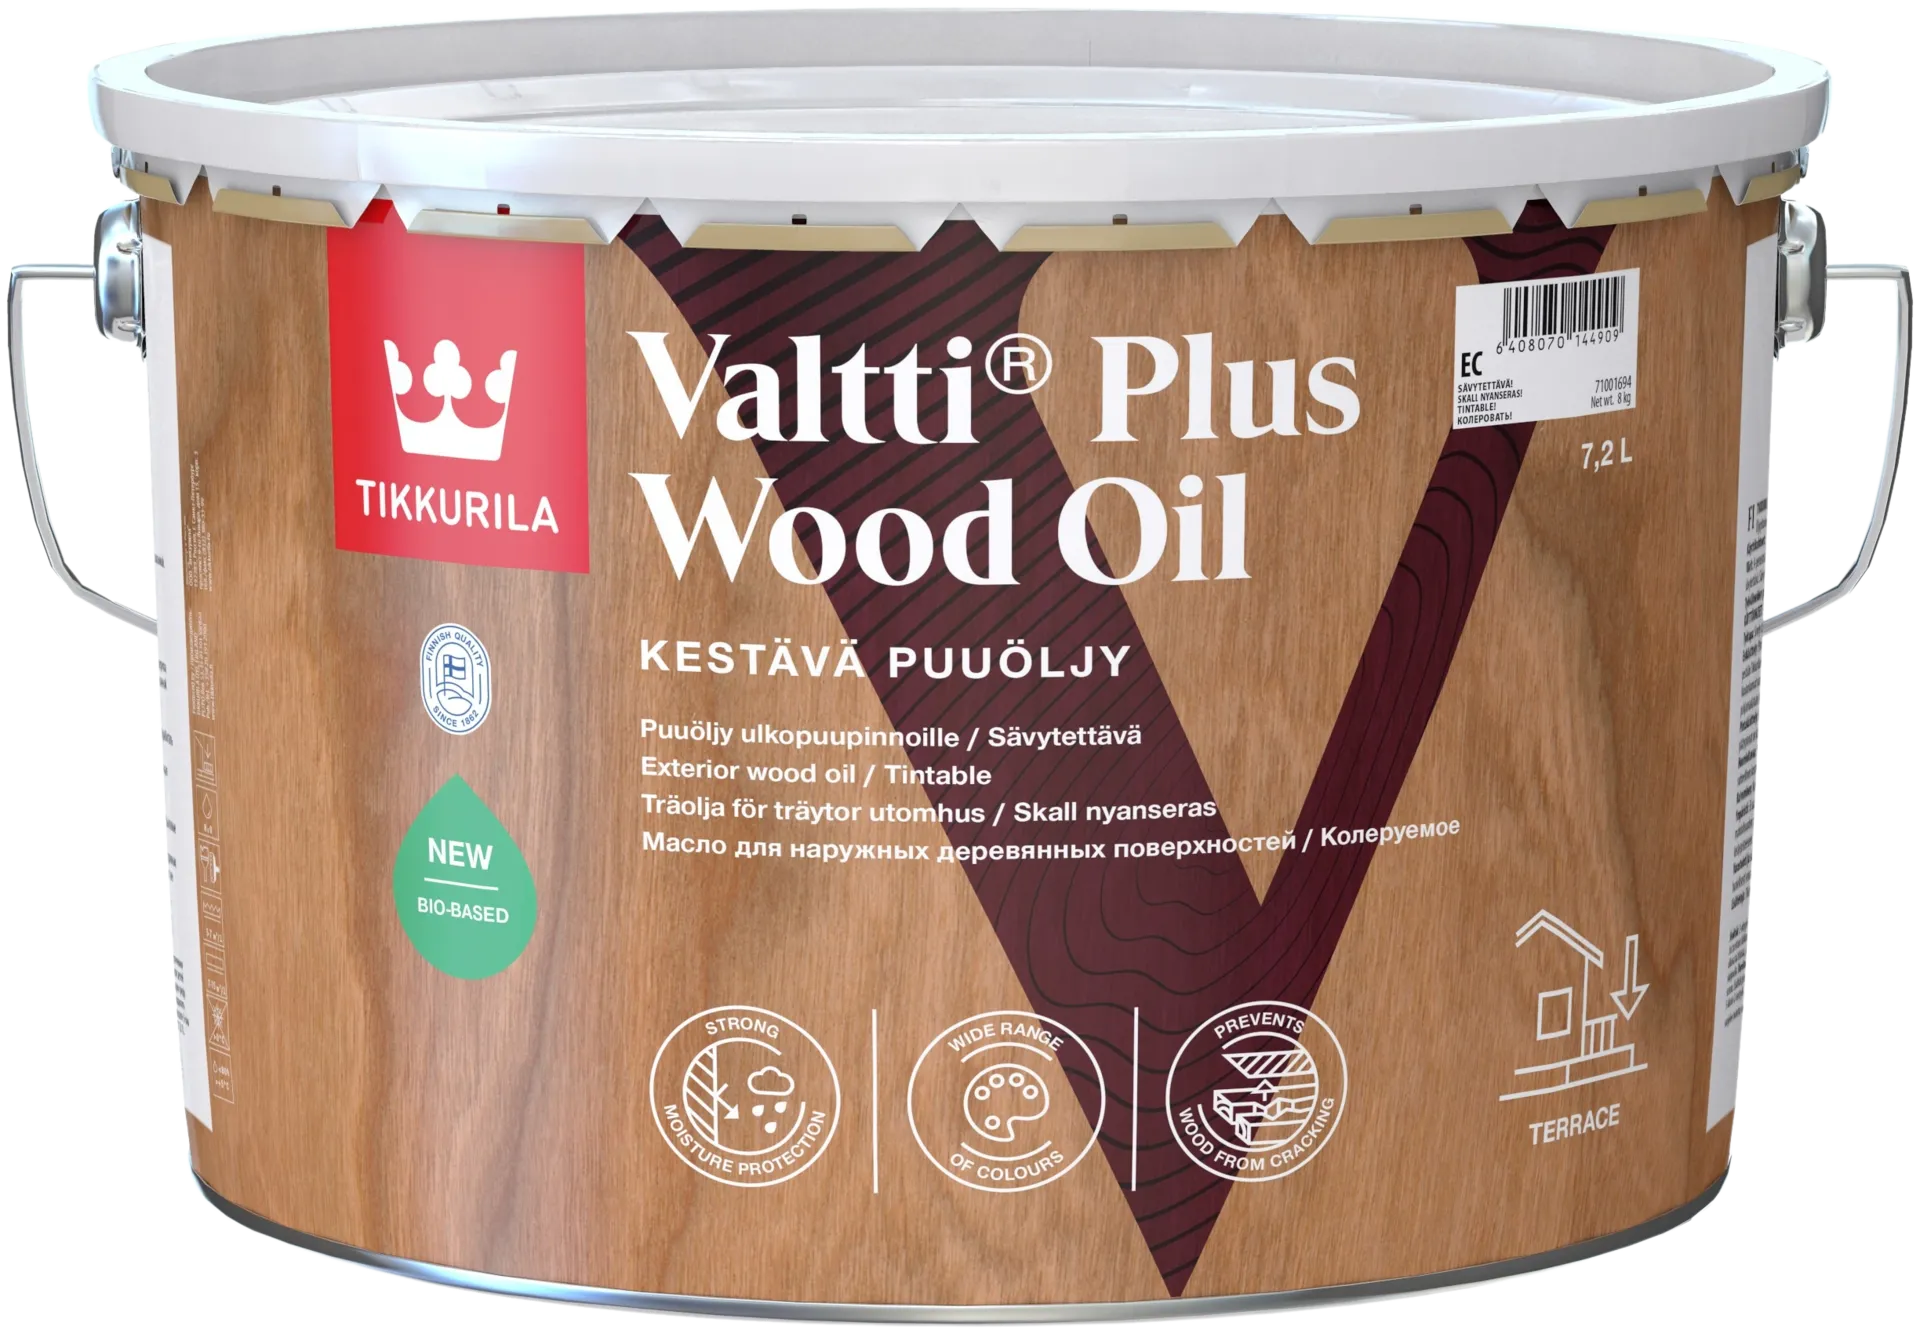 Tikkurila Valtti Plus Wood Oil puuöljy 7,2 l EC